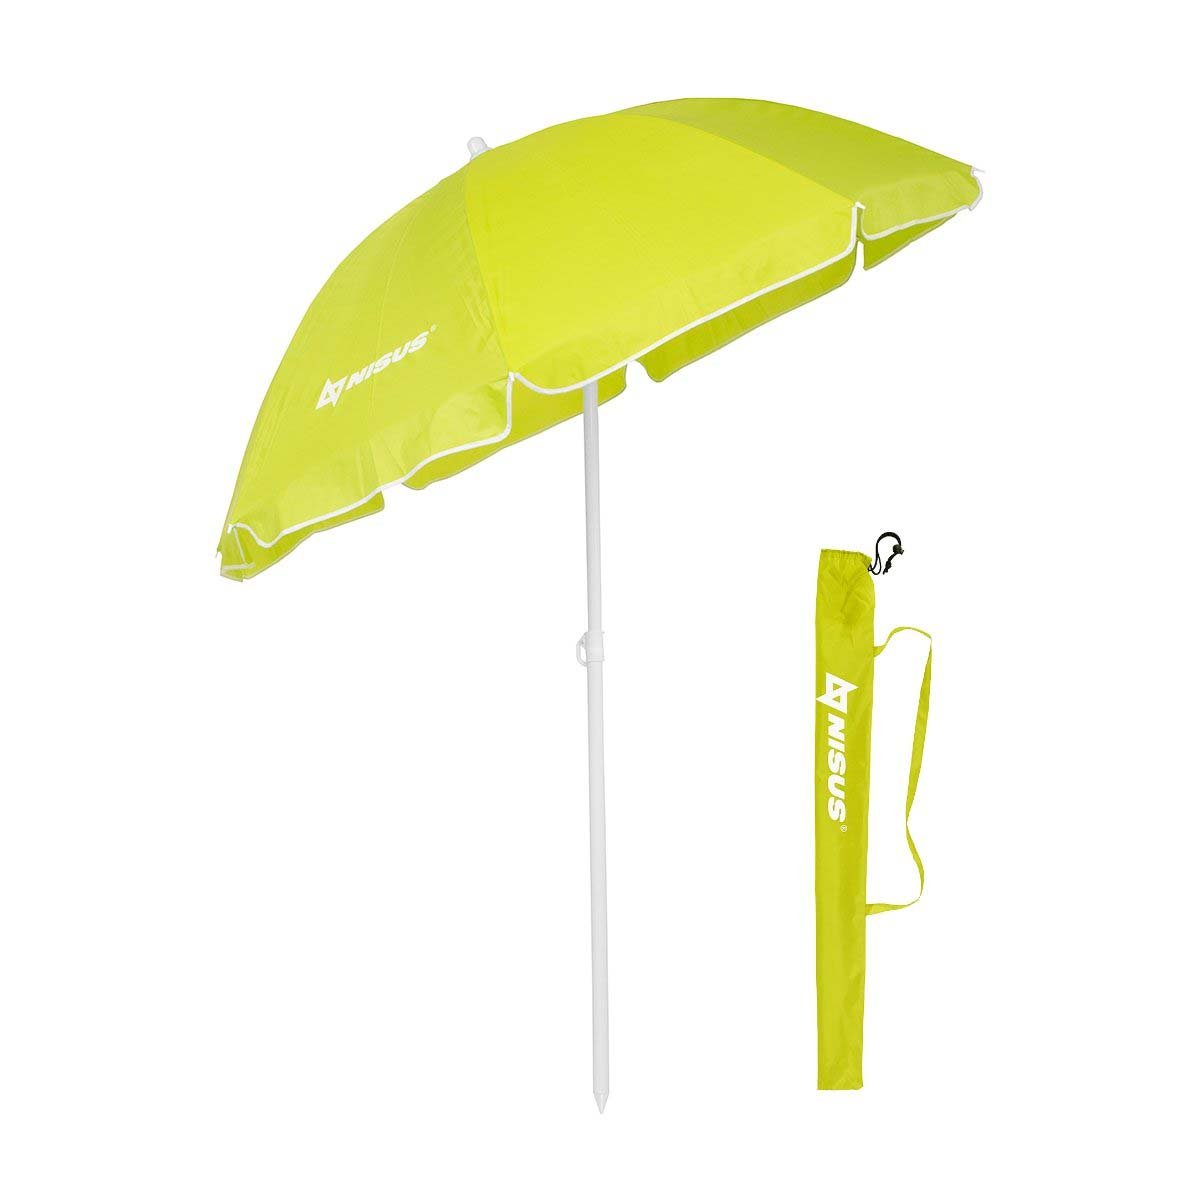 5, 6 ft Lime Green Folding Tilting Beach Umbrella with Carry Bag